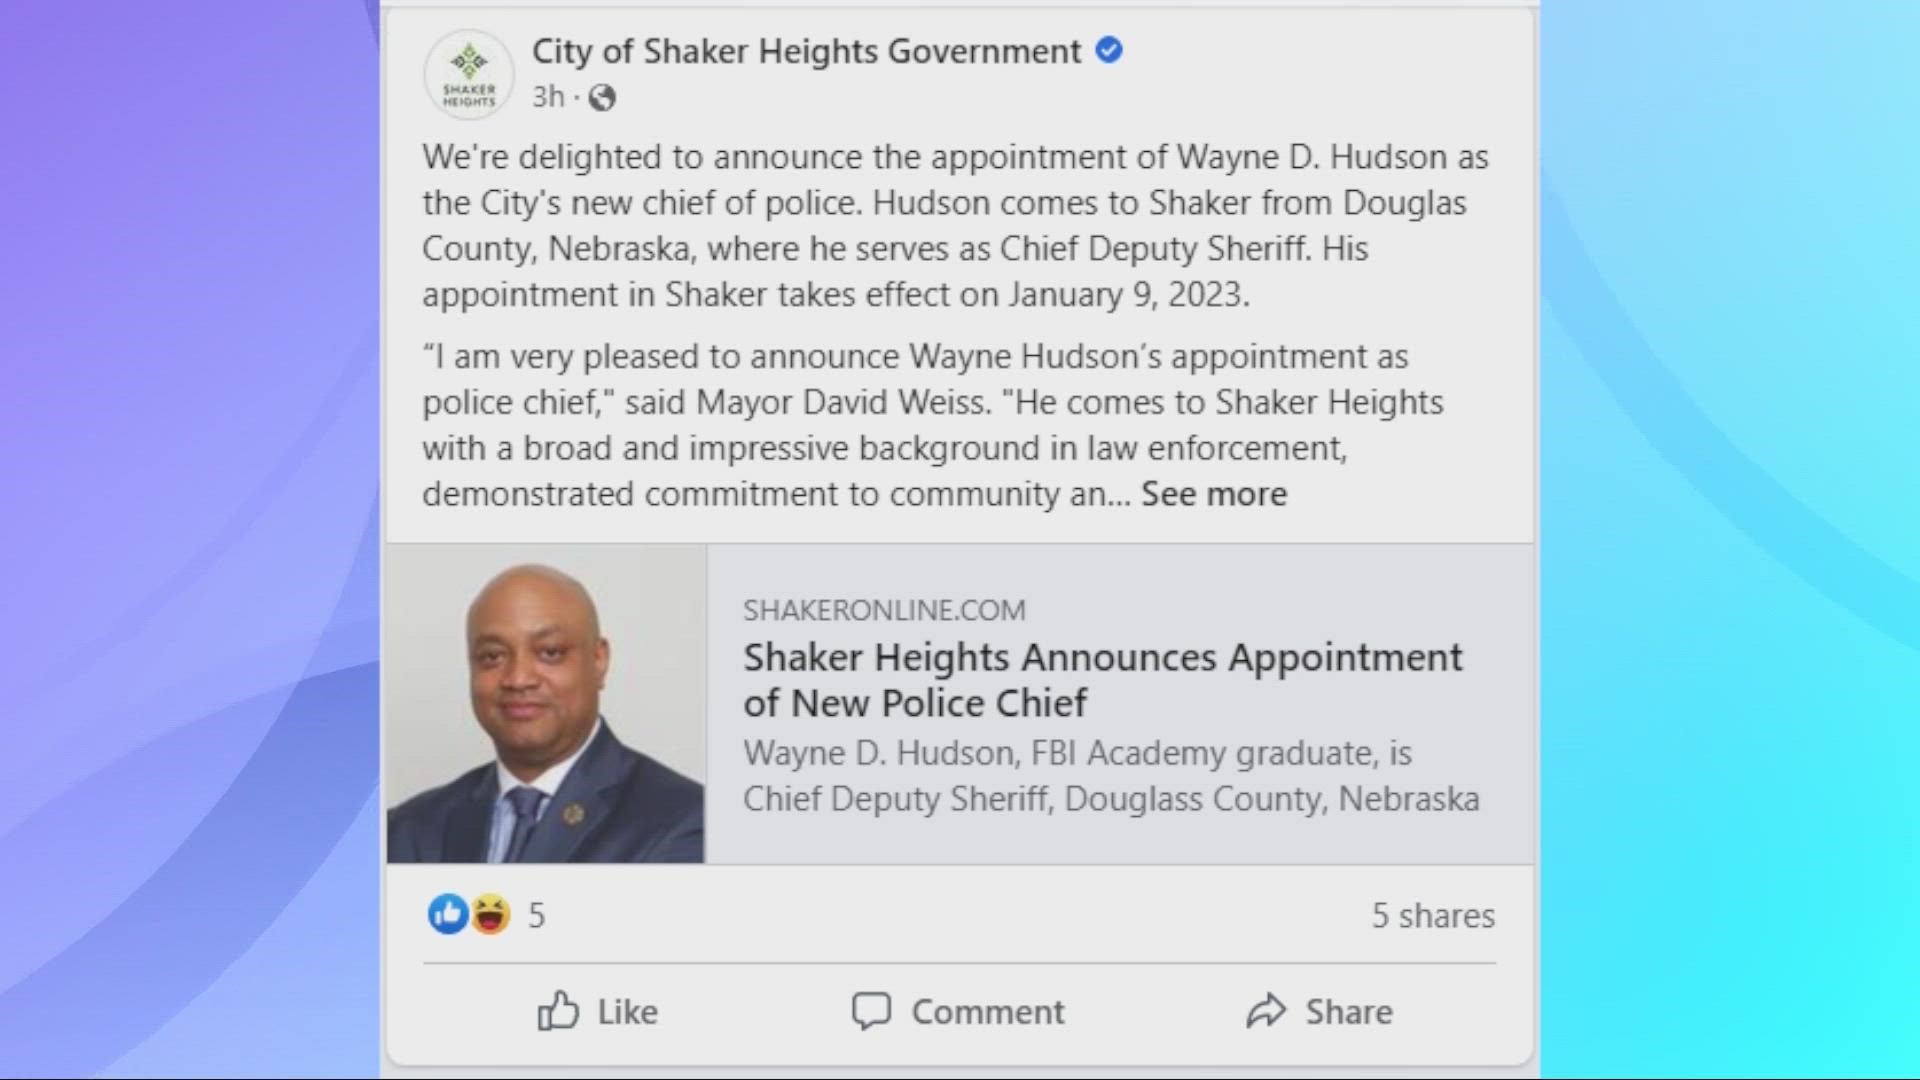 Hudson previously served as the Chief Deputy Sheriff in Douglas County, Nebraska.